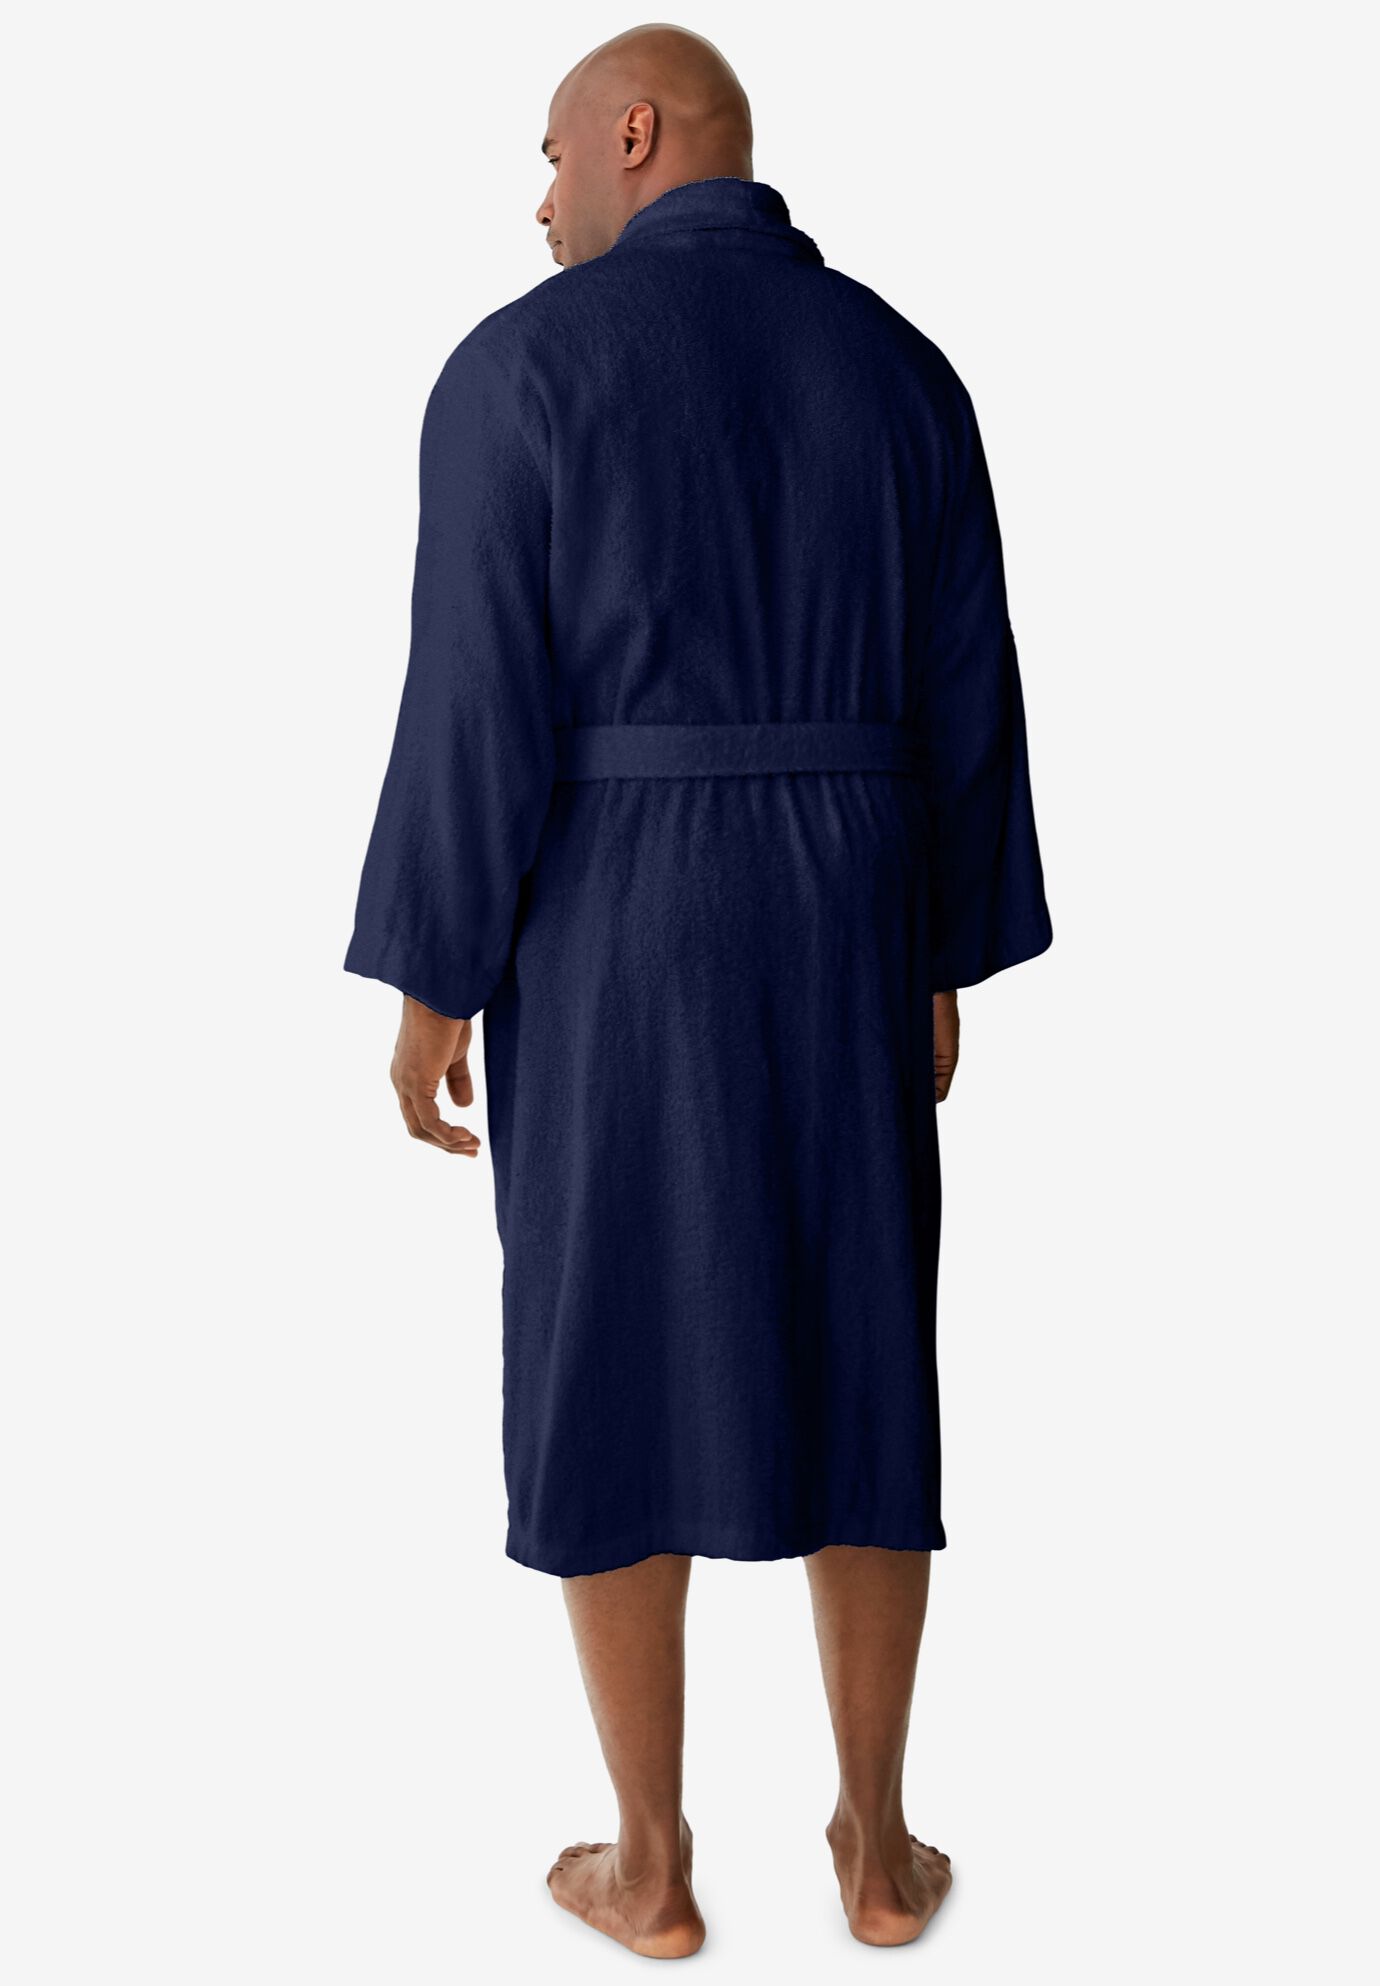 MenS Warm Flannel Fleece Robe With Hood Big And Tall Bathrobe Full Length 